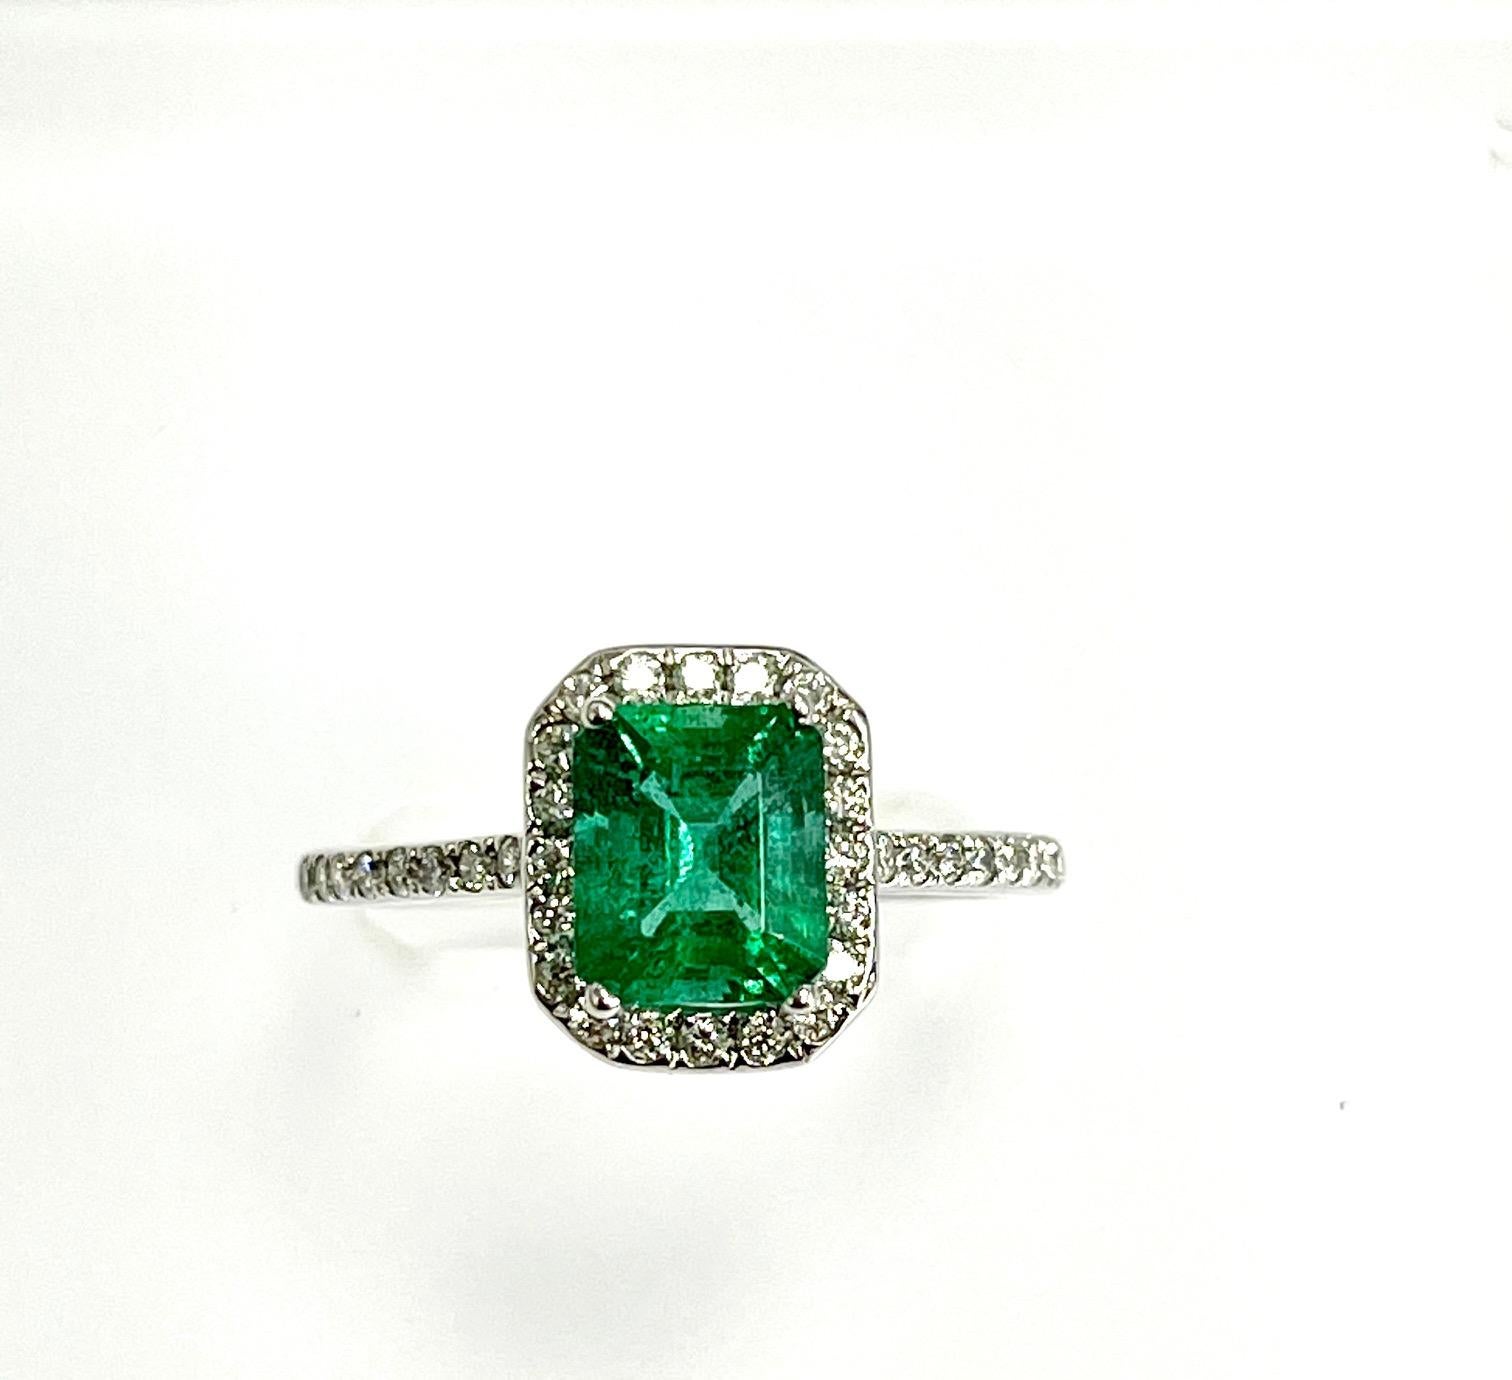 1.16 Carat emerald cut zambian emerald set in 18k white gold ring with 0.32 carat diamonds around it 